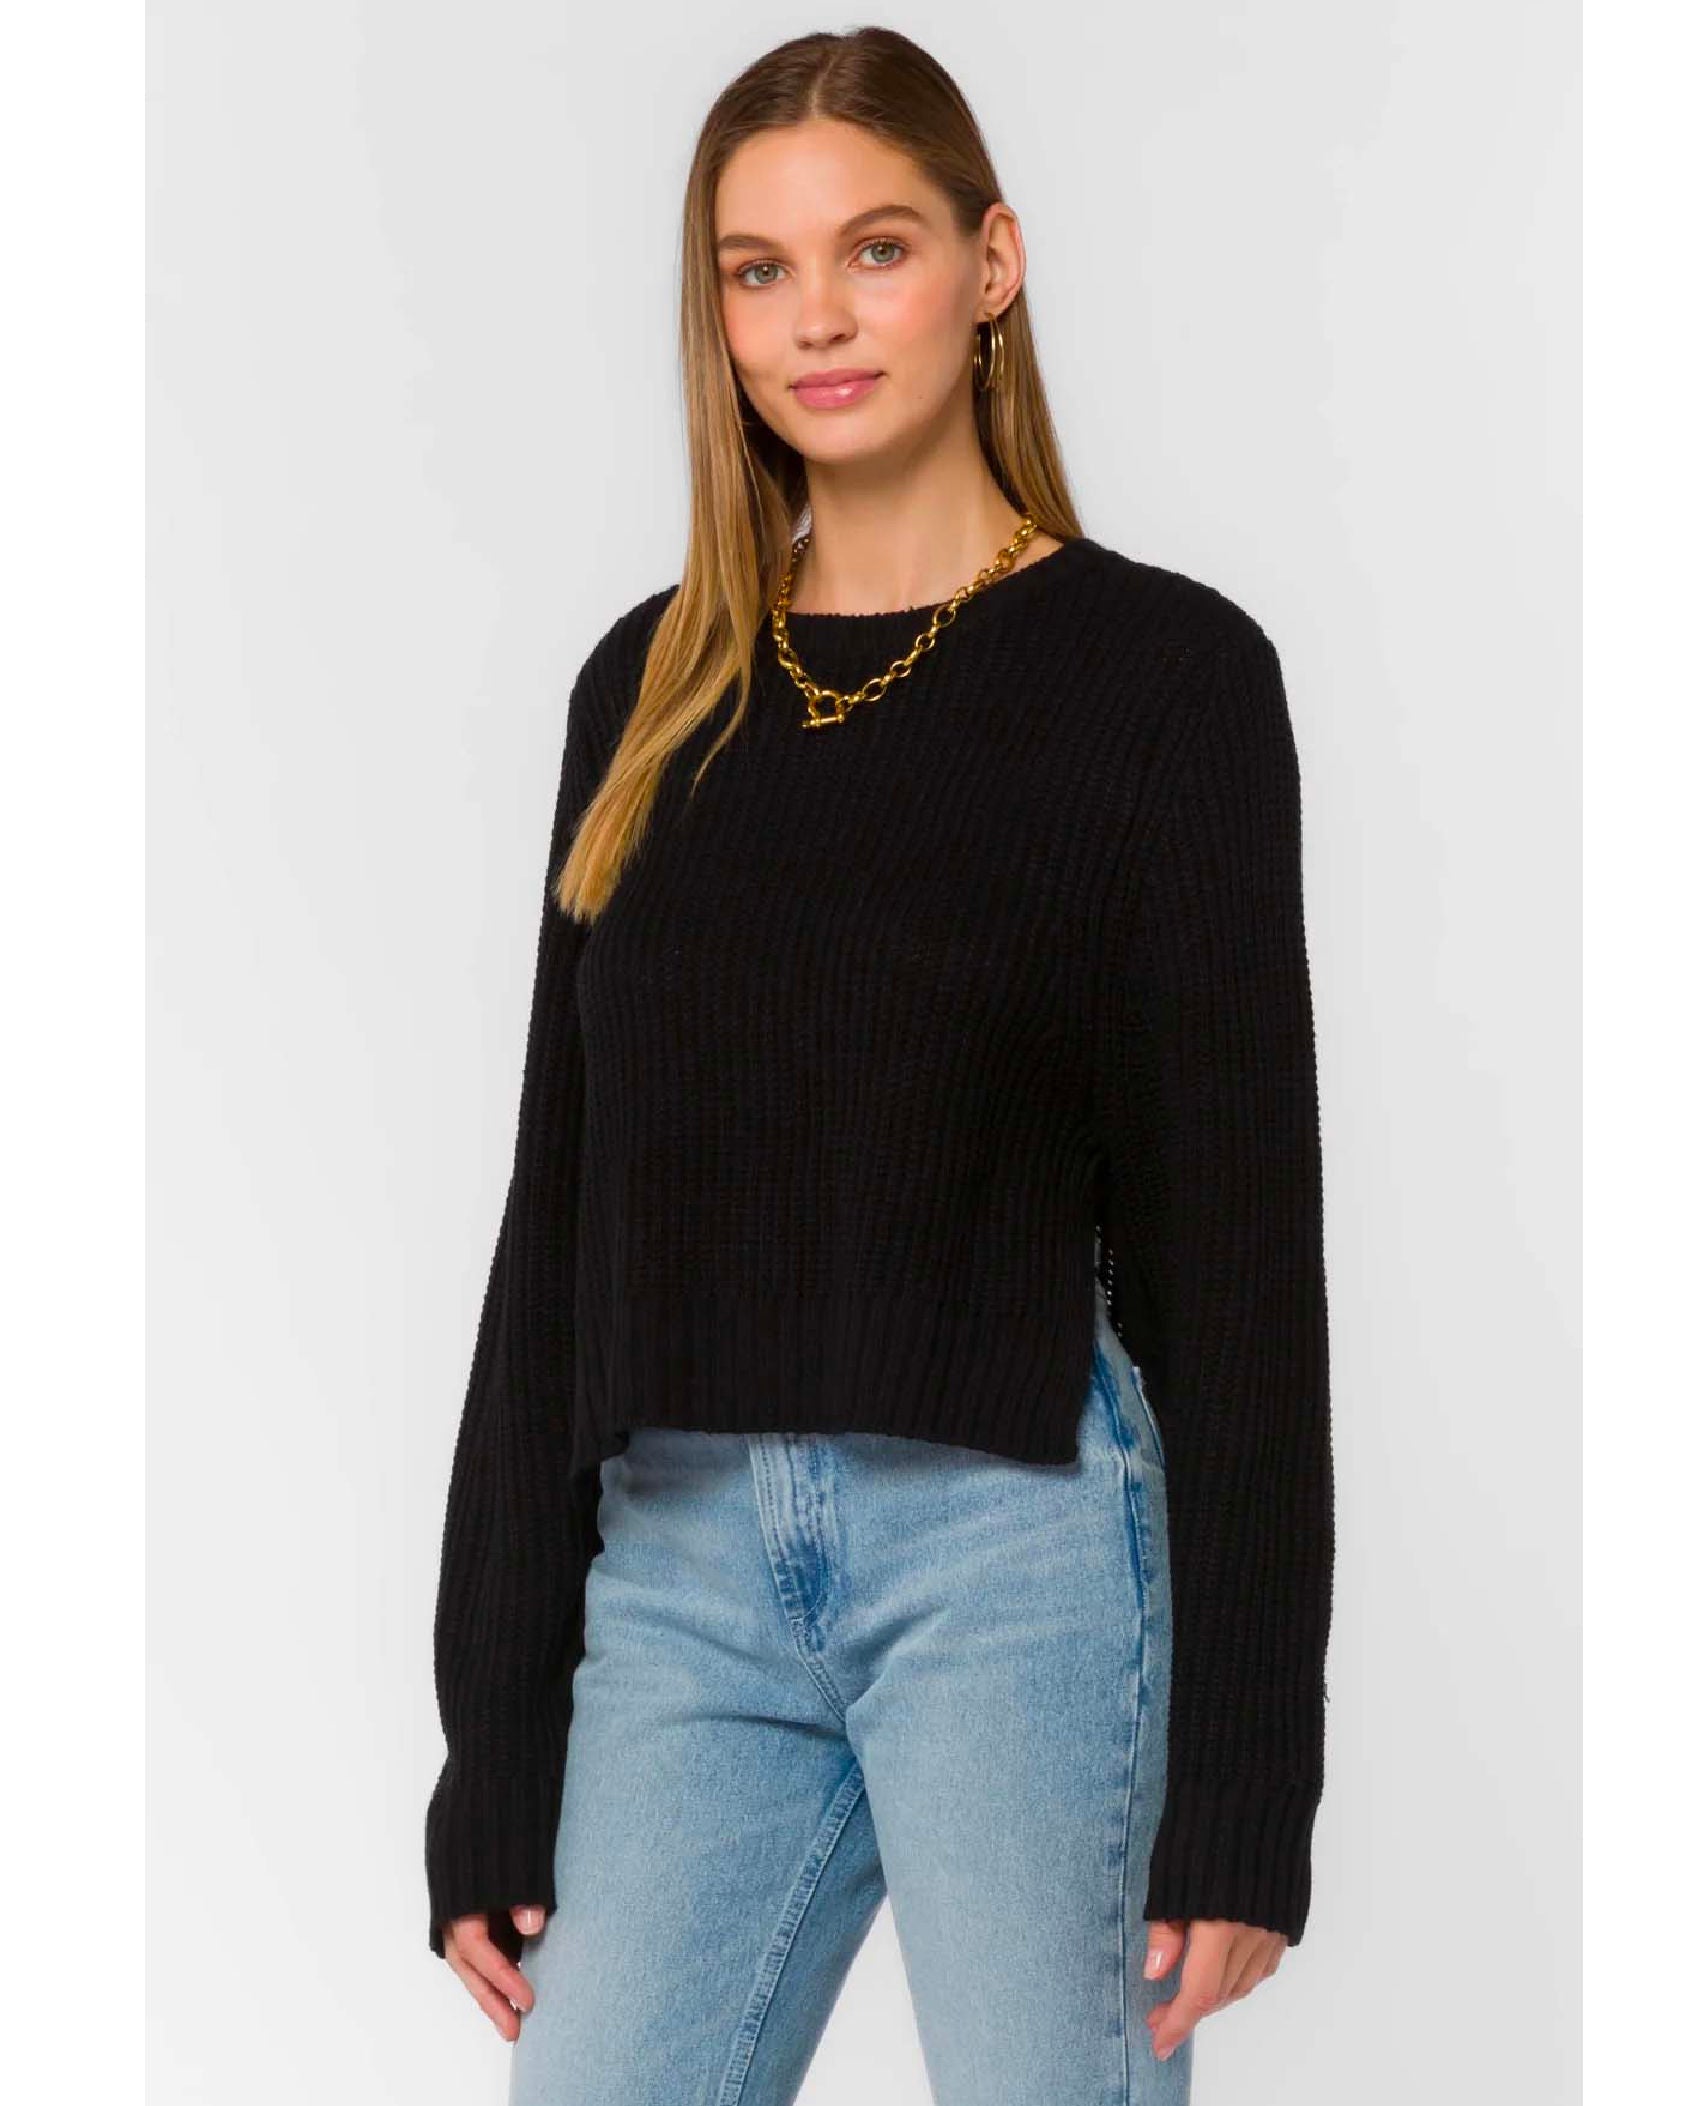 Korina Black Crew Sweater